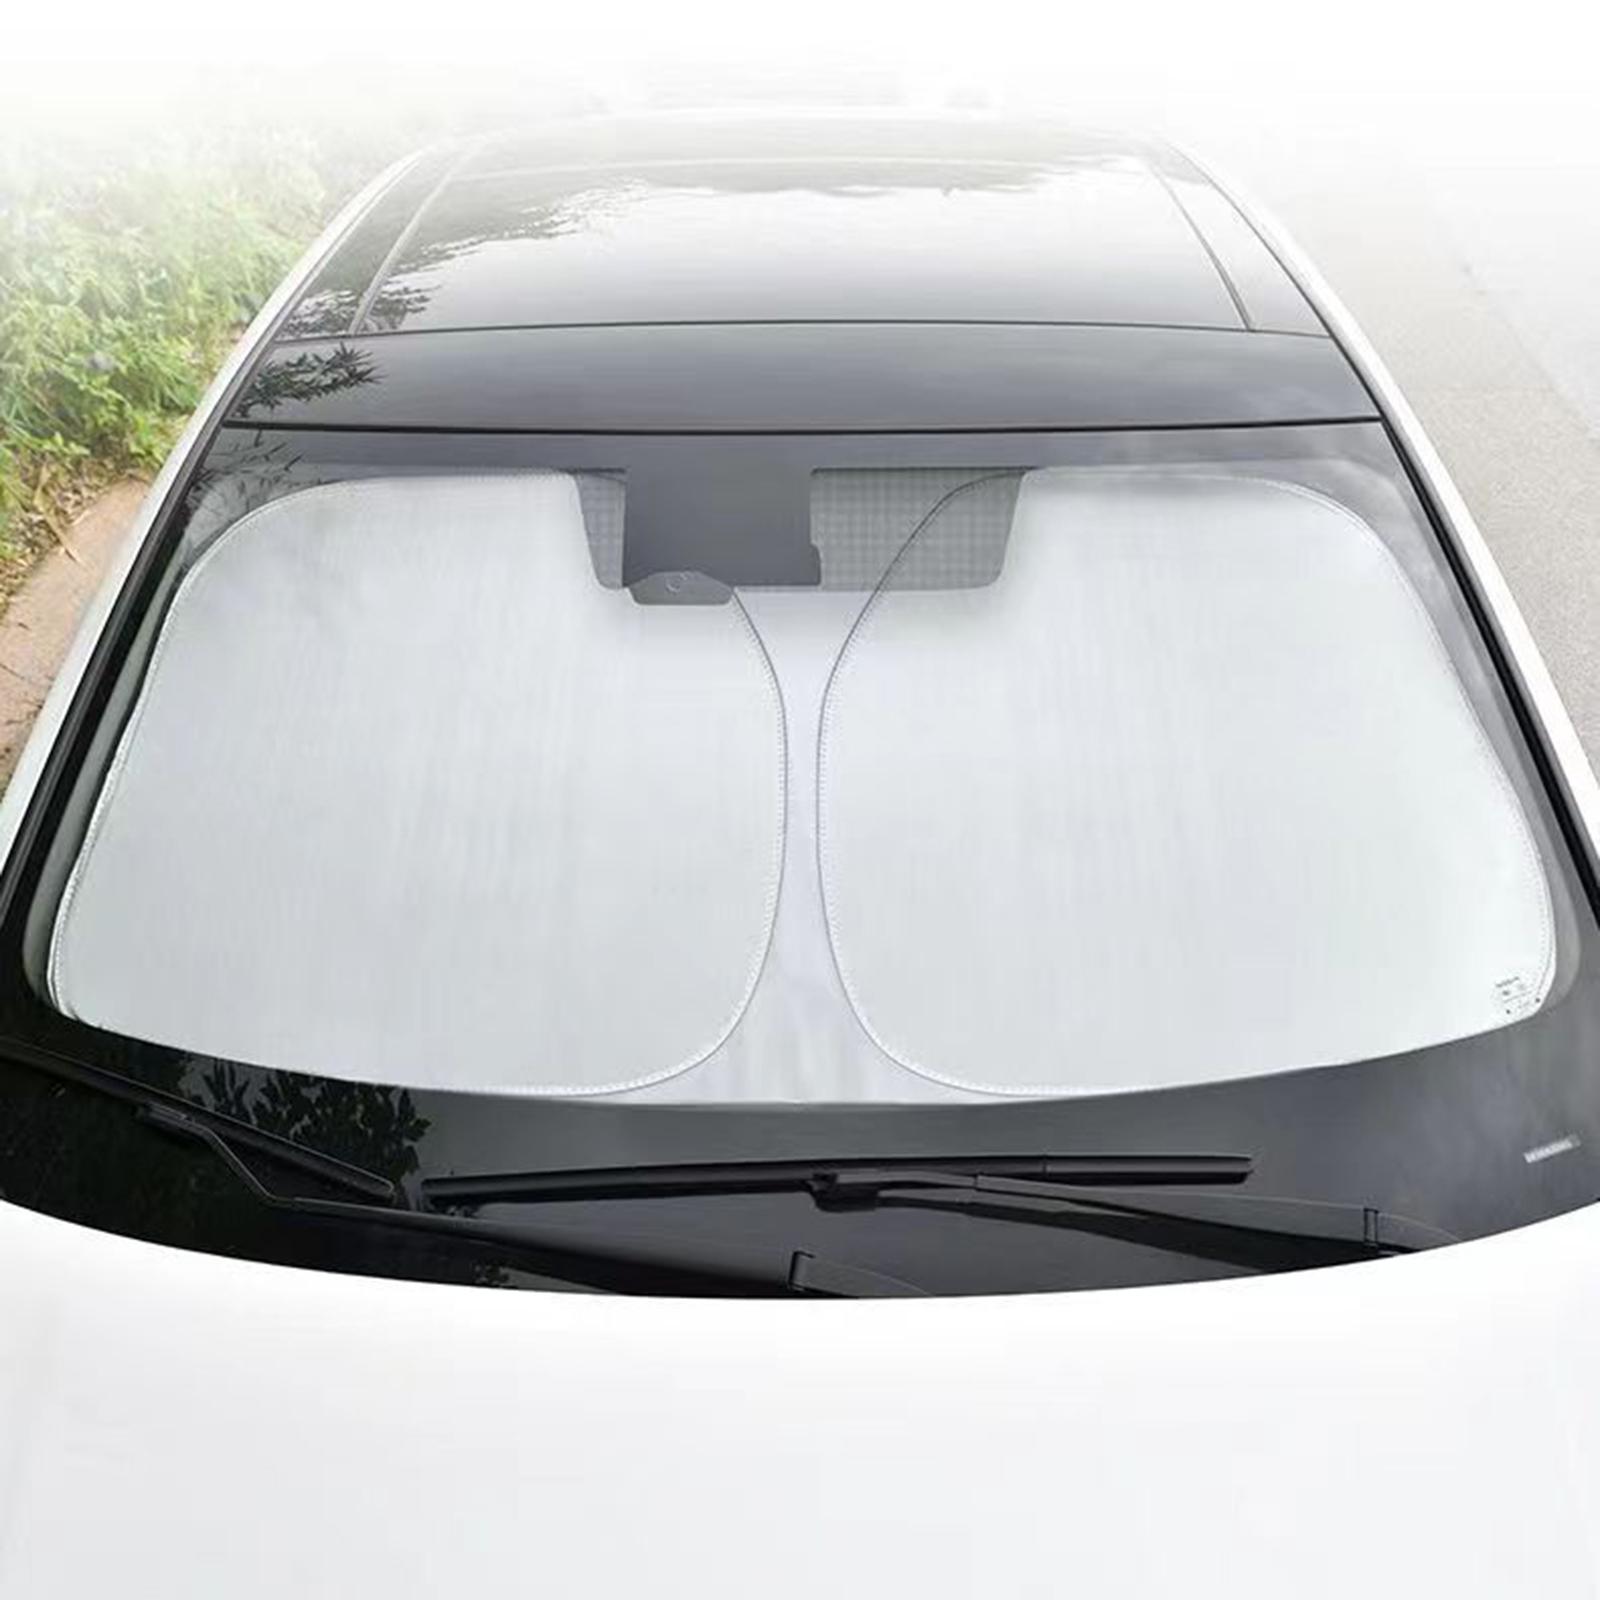 Car Windshield Sunshade Foldable for Car SUV Truck Vehicle Nap Sleeping 145cmx80cm